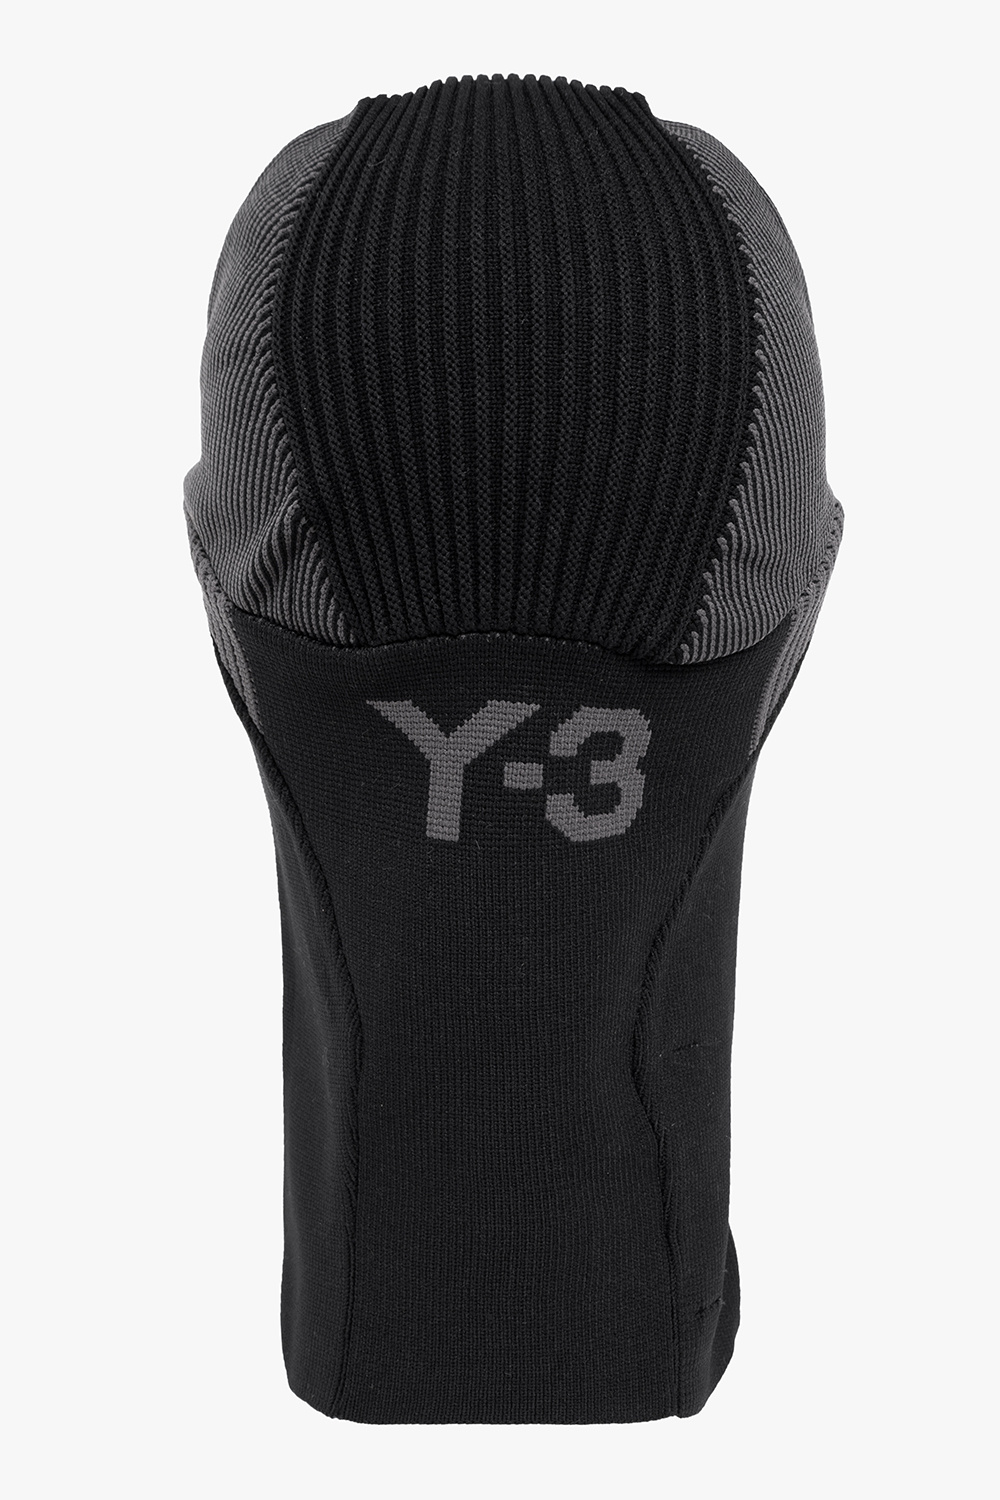 Y-3 Yohji Yamamoto Alfani adam cap toe oxford shoes sz 7 w black